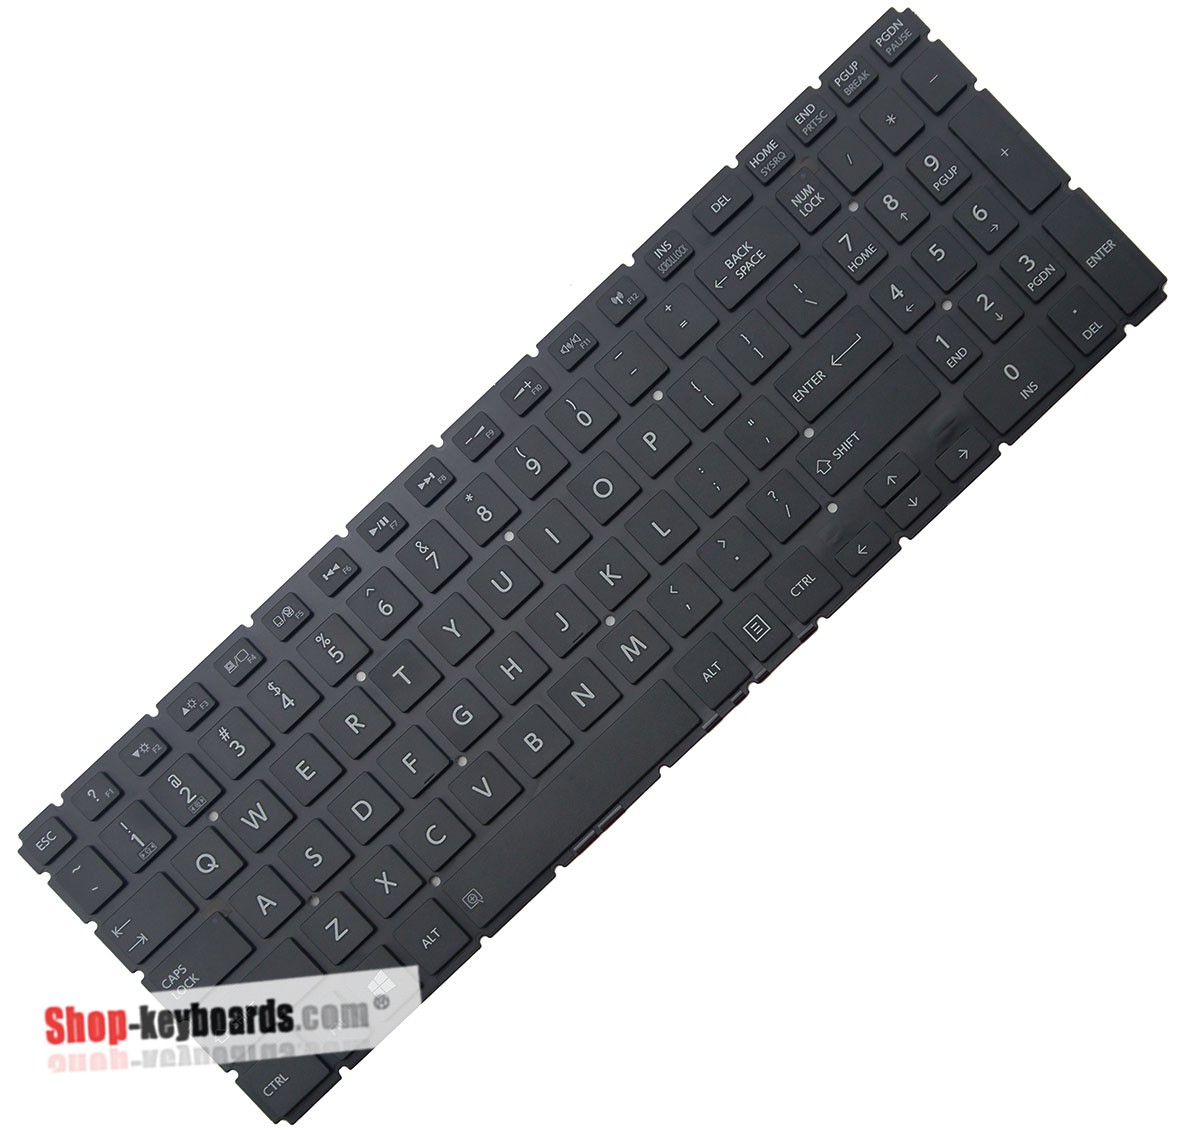 Toshiba AEBLYR00210 Keyboard replacement